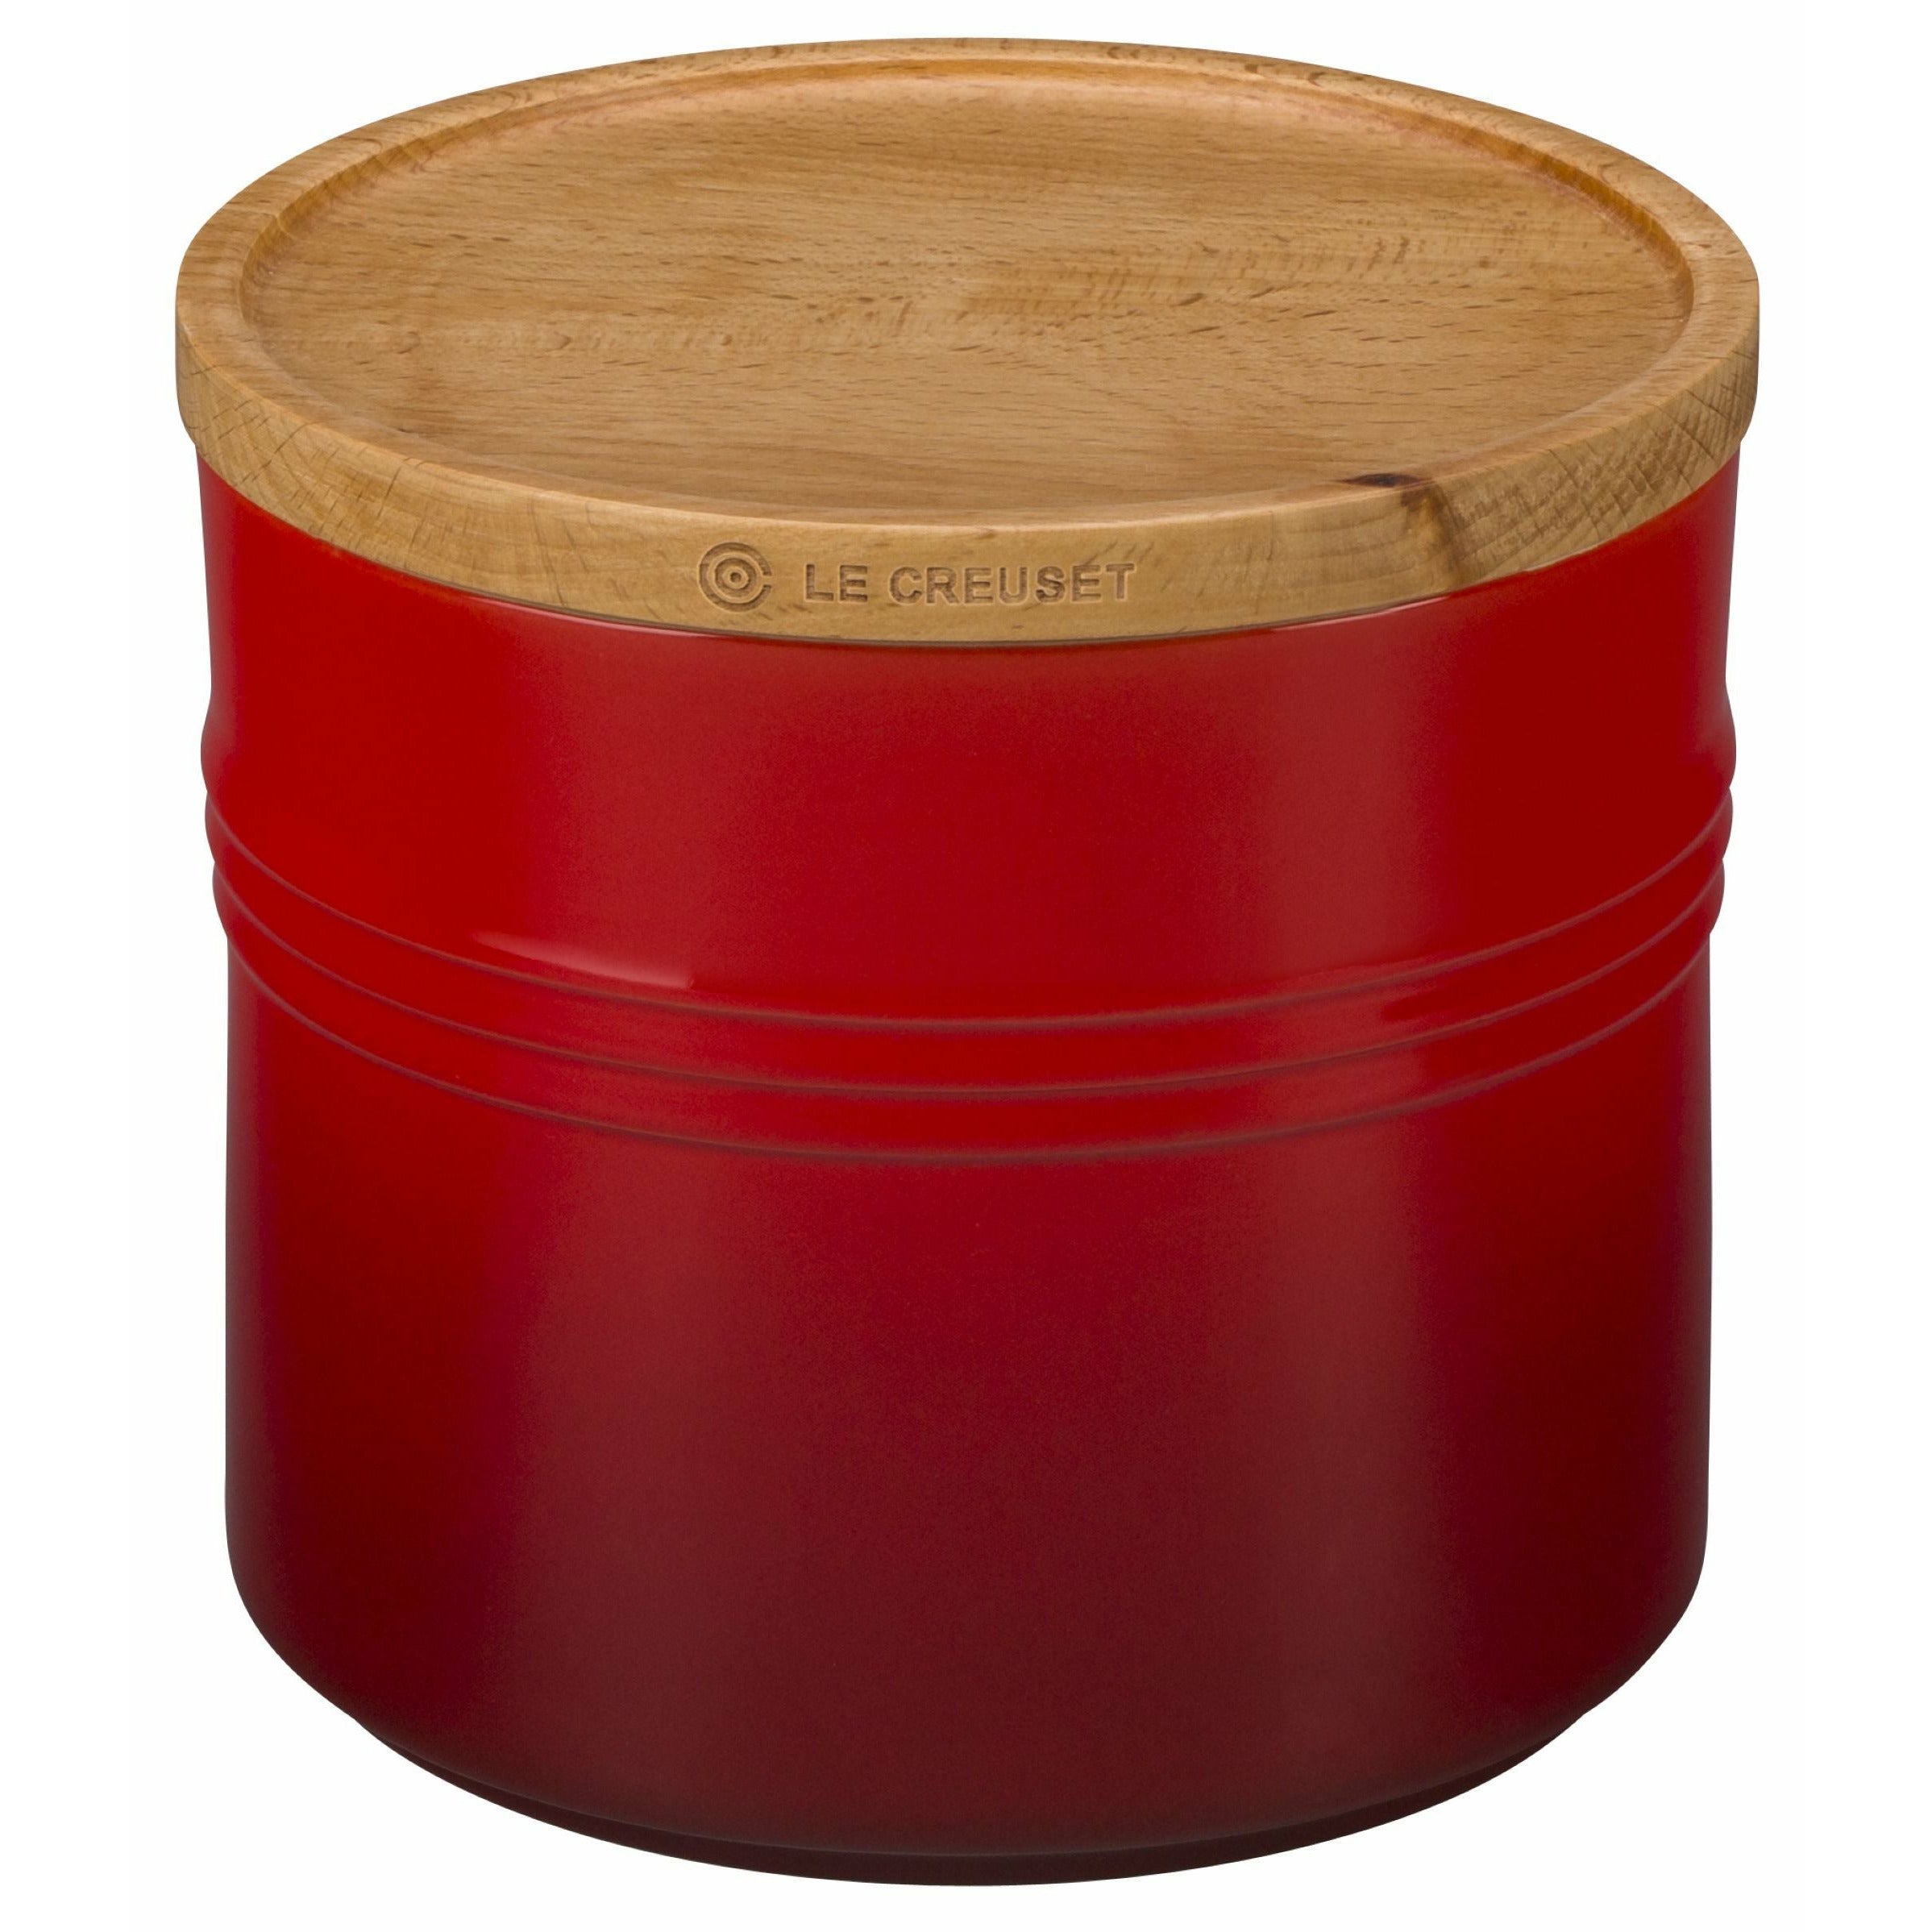 Le Creuset Medium Storage Jar 1,4 L, Cherry Red